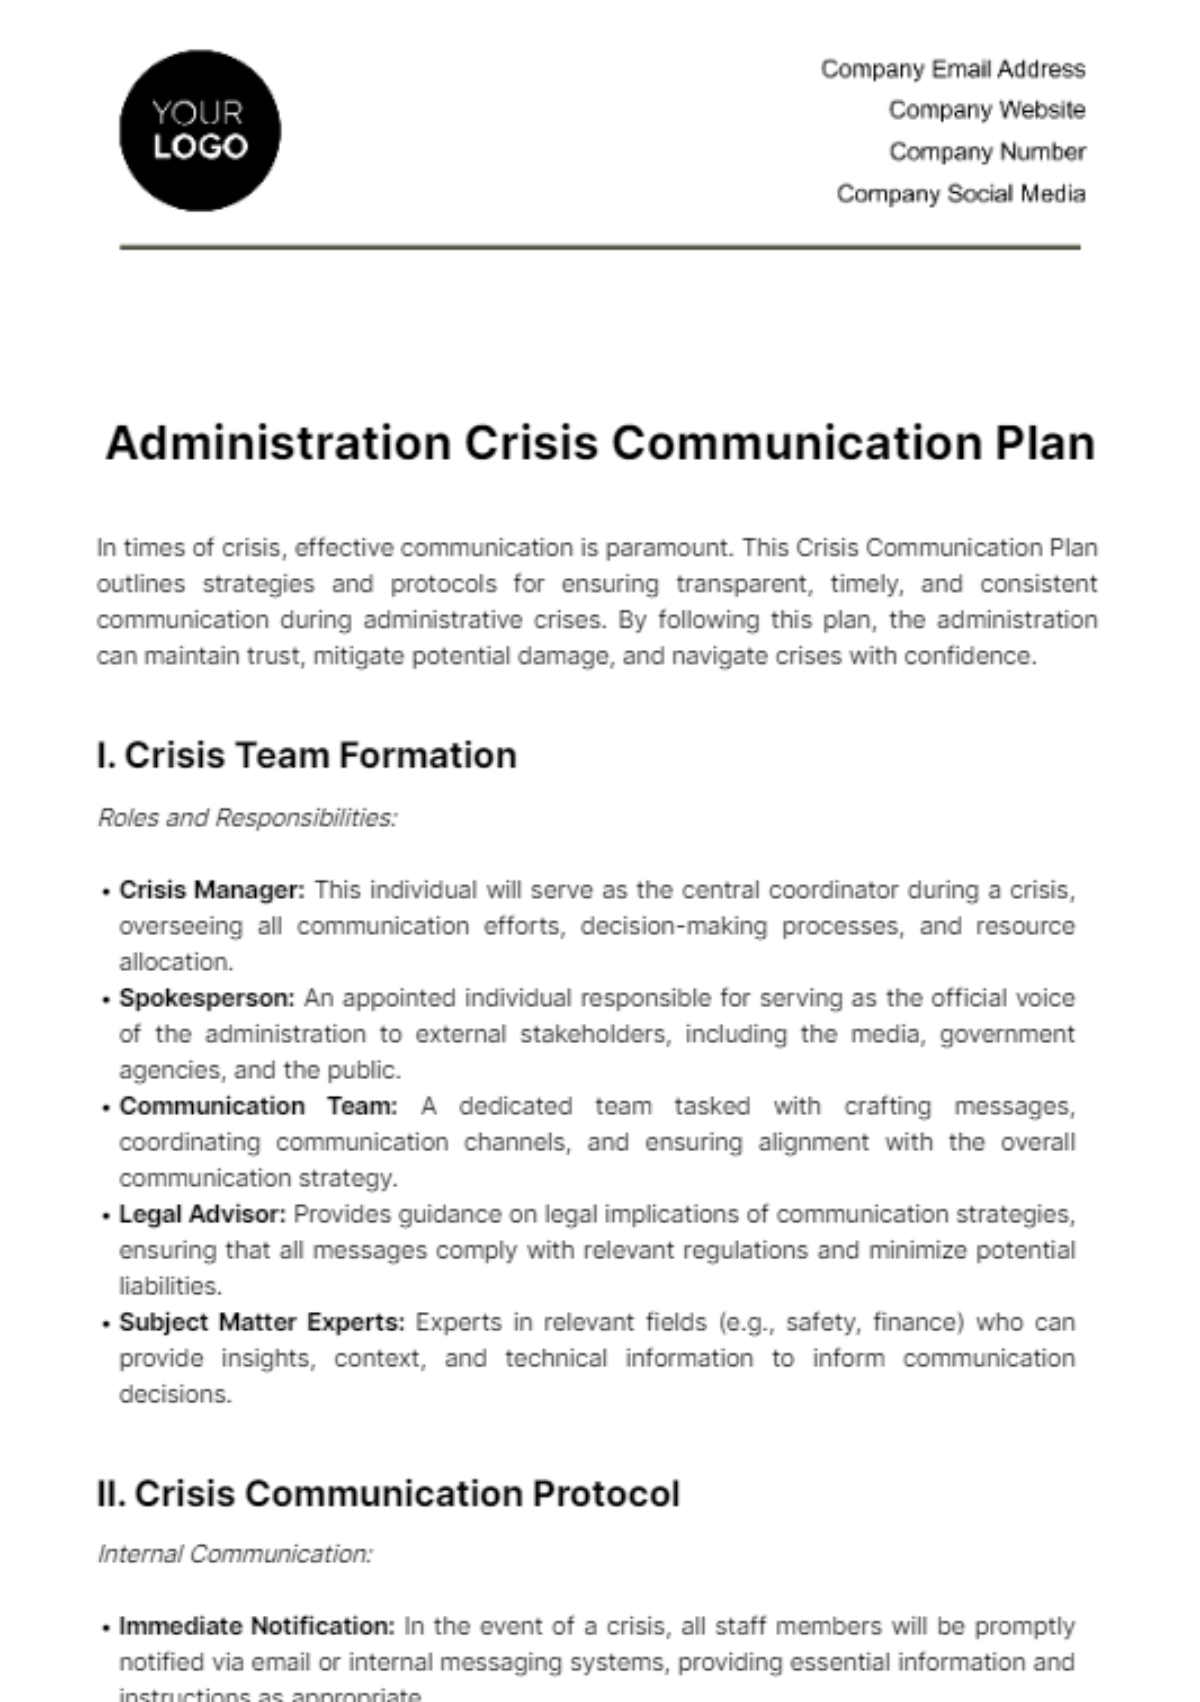 Administration Crisis Communication Plan Template